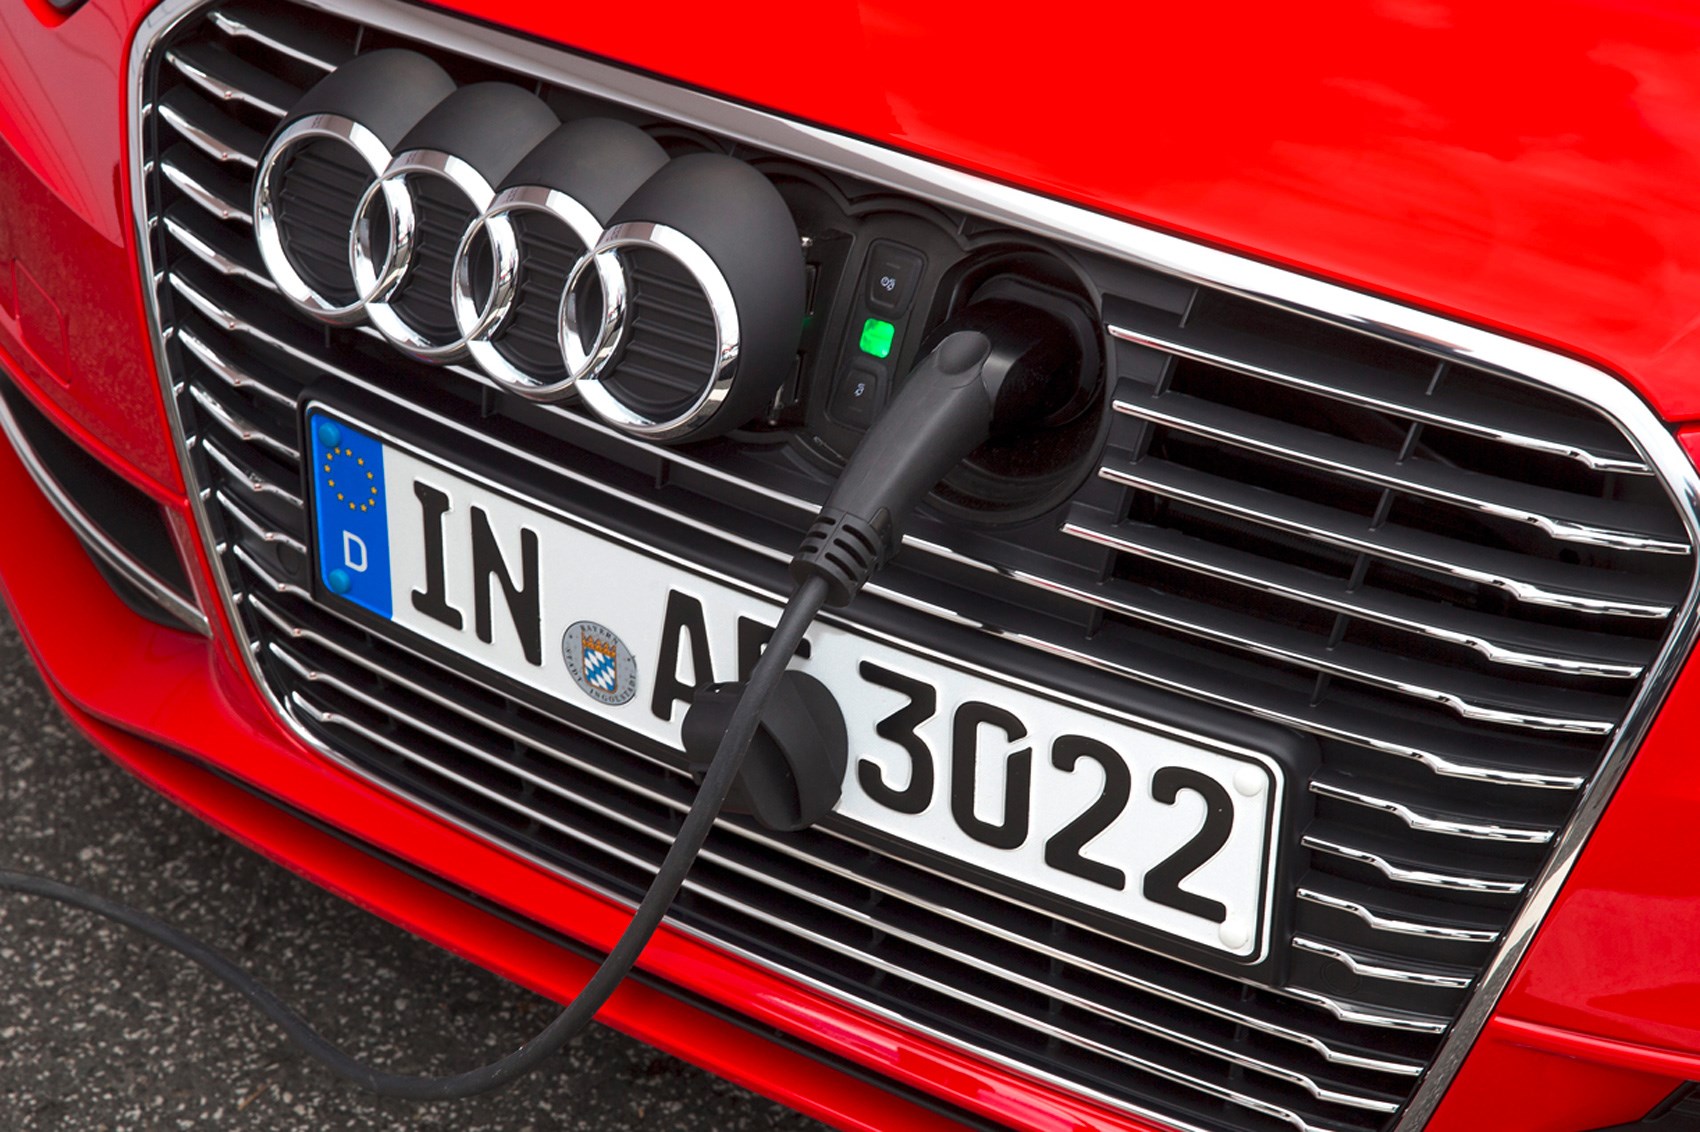 Audi's A6 Avant e-Tron concept proves there's life in the estate